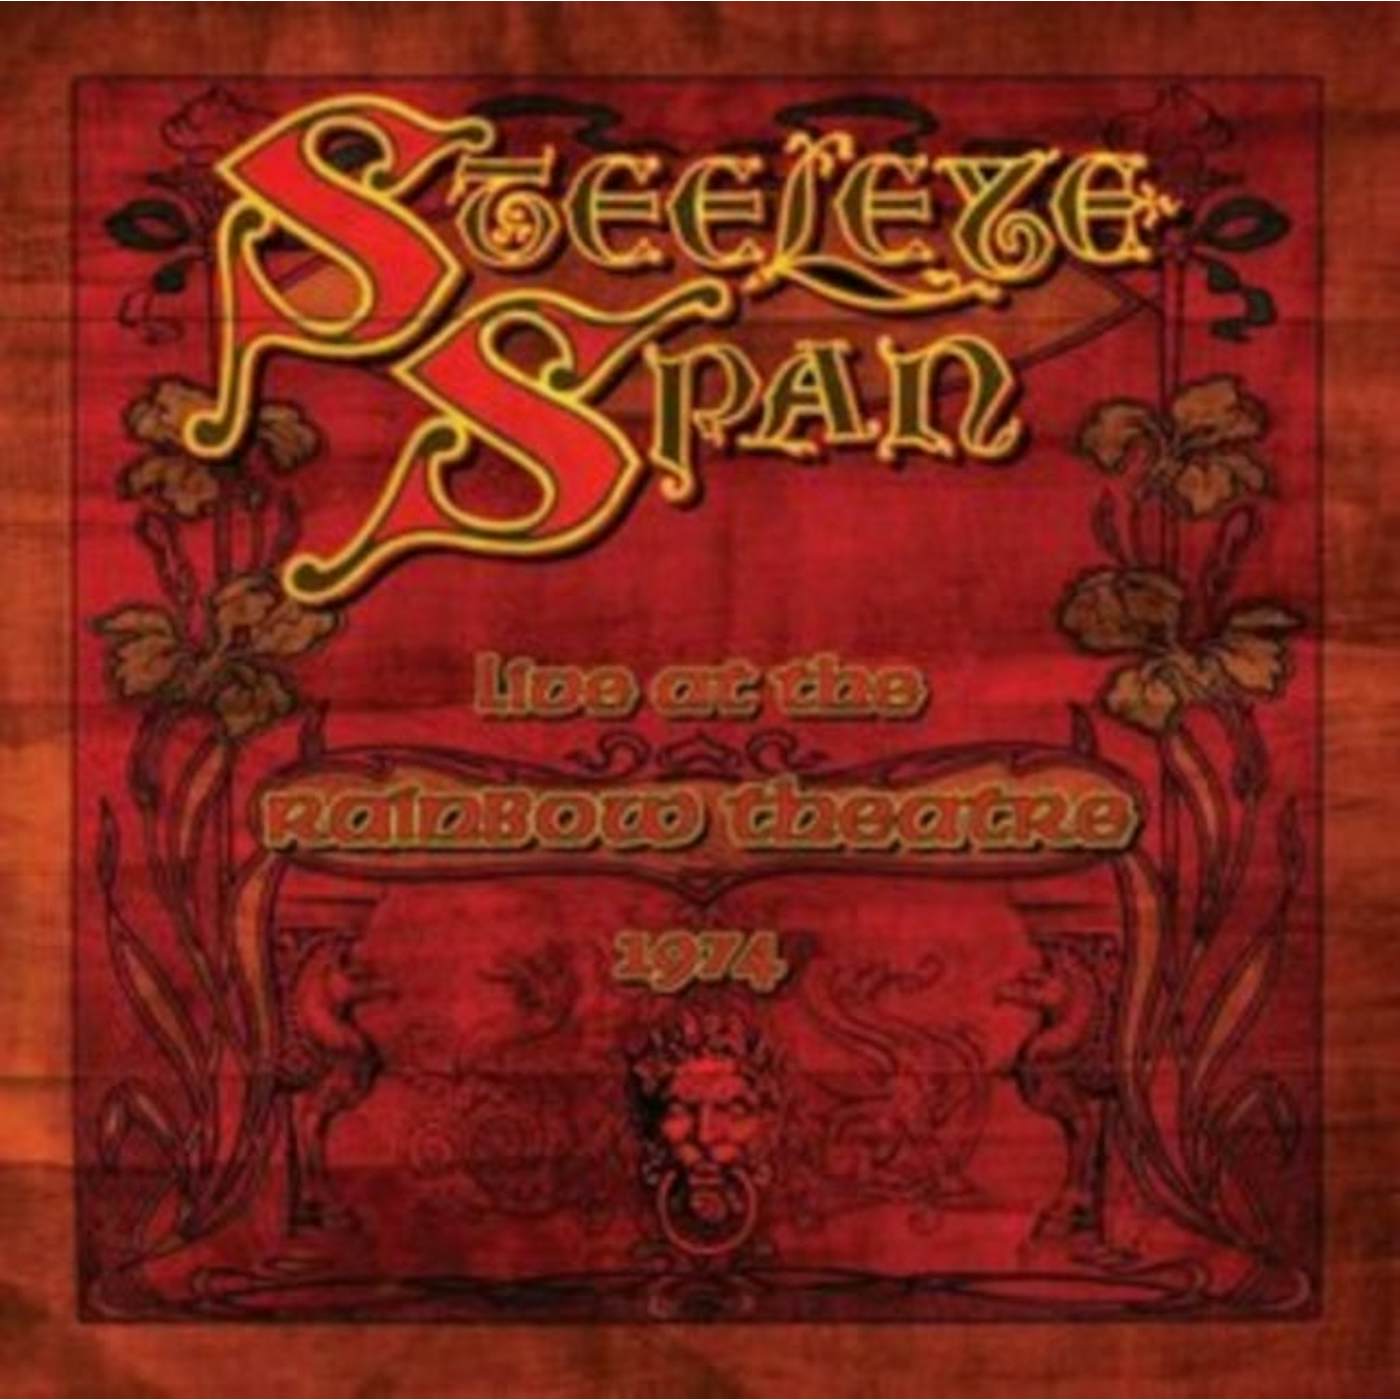 Steeleye Span LP - Live At The Rainbow Theatre 19 (Vinyl)